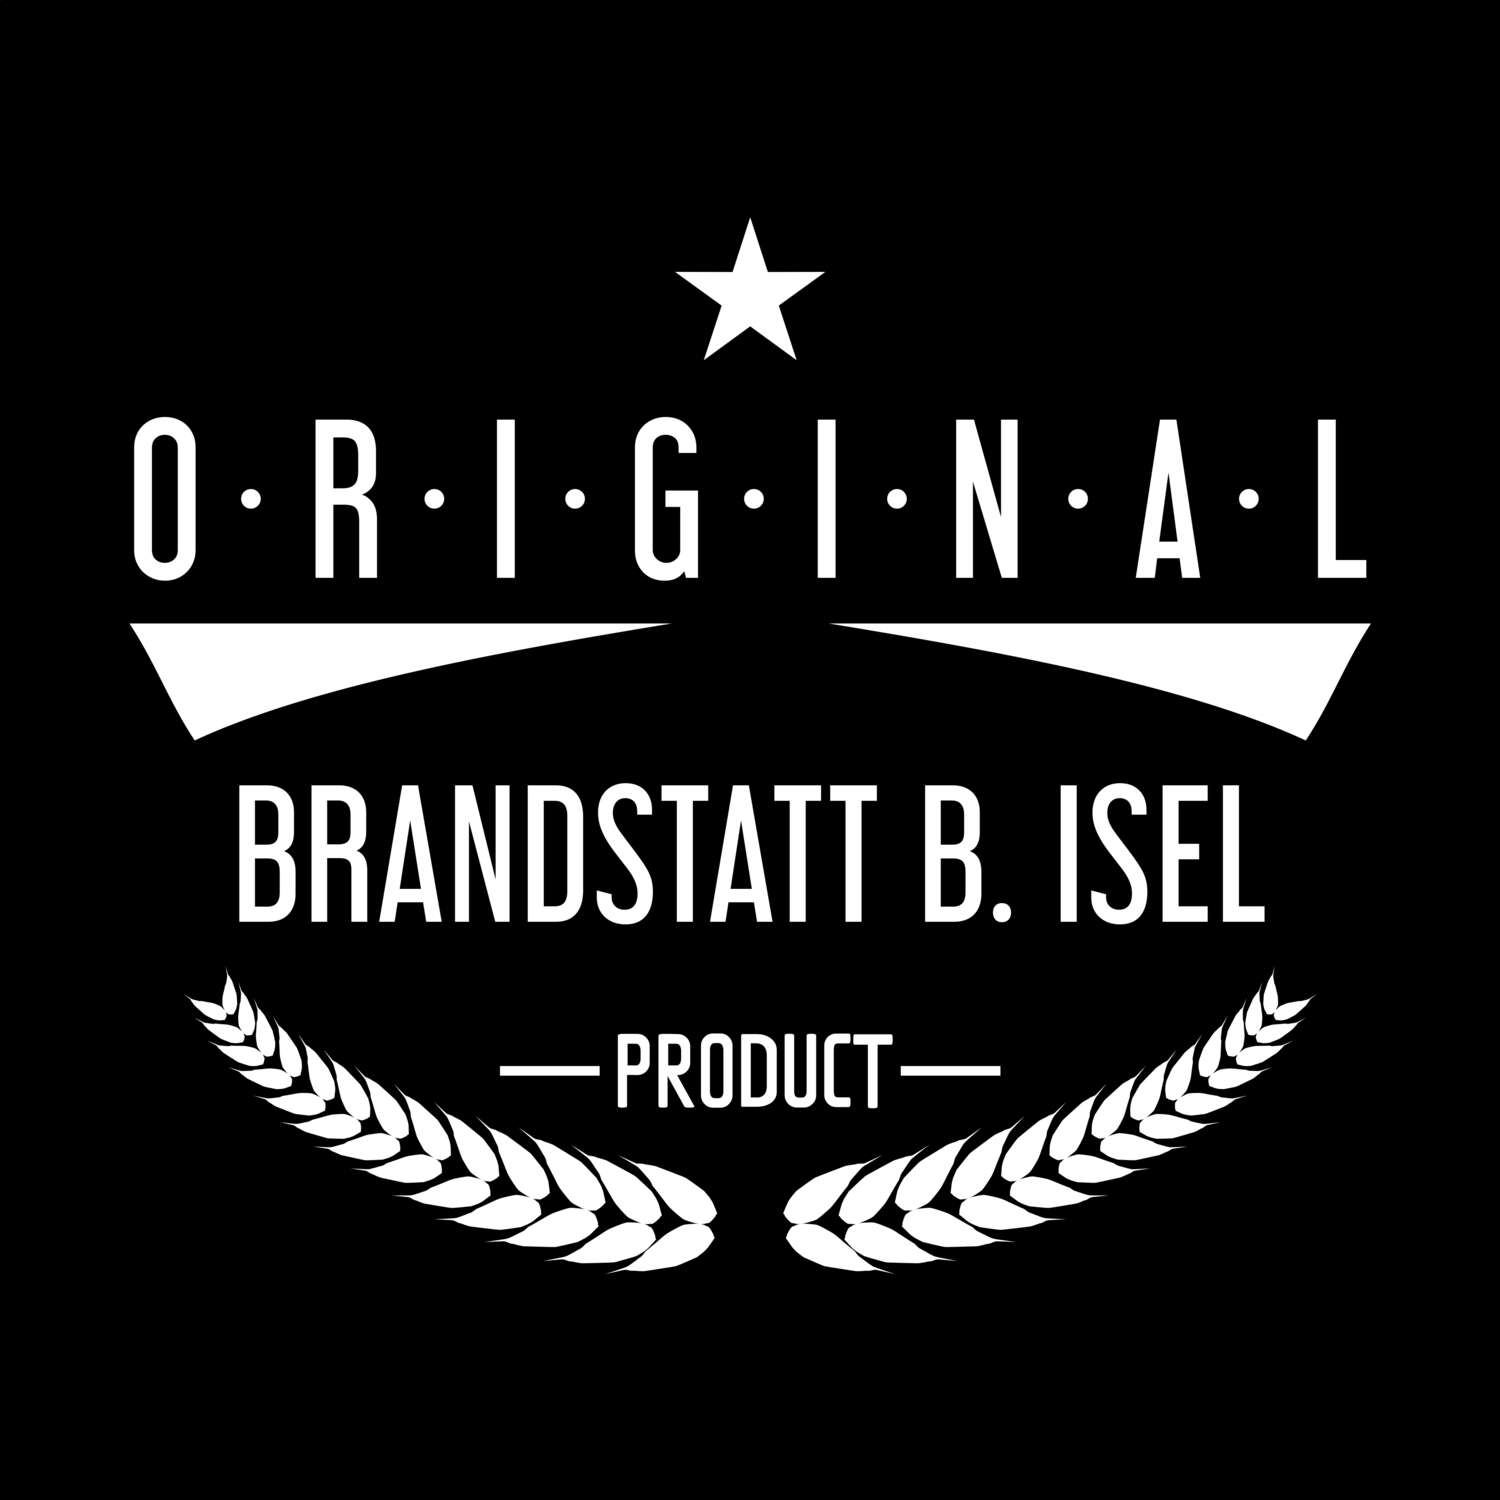 Brandstatt b. Isel T-Shirt »Original Product«